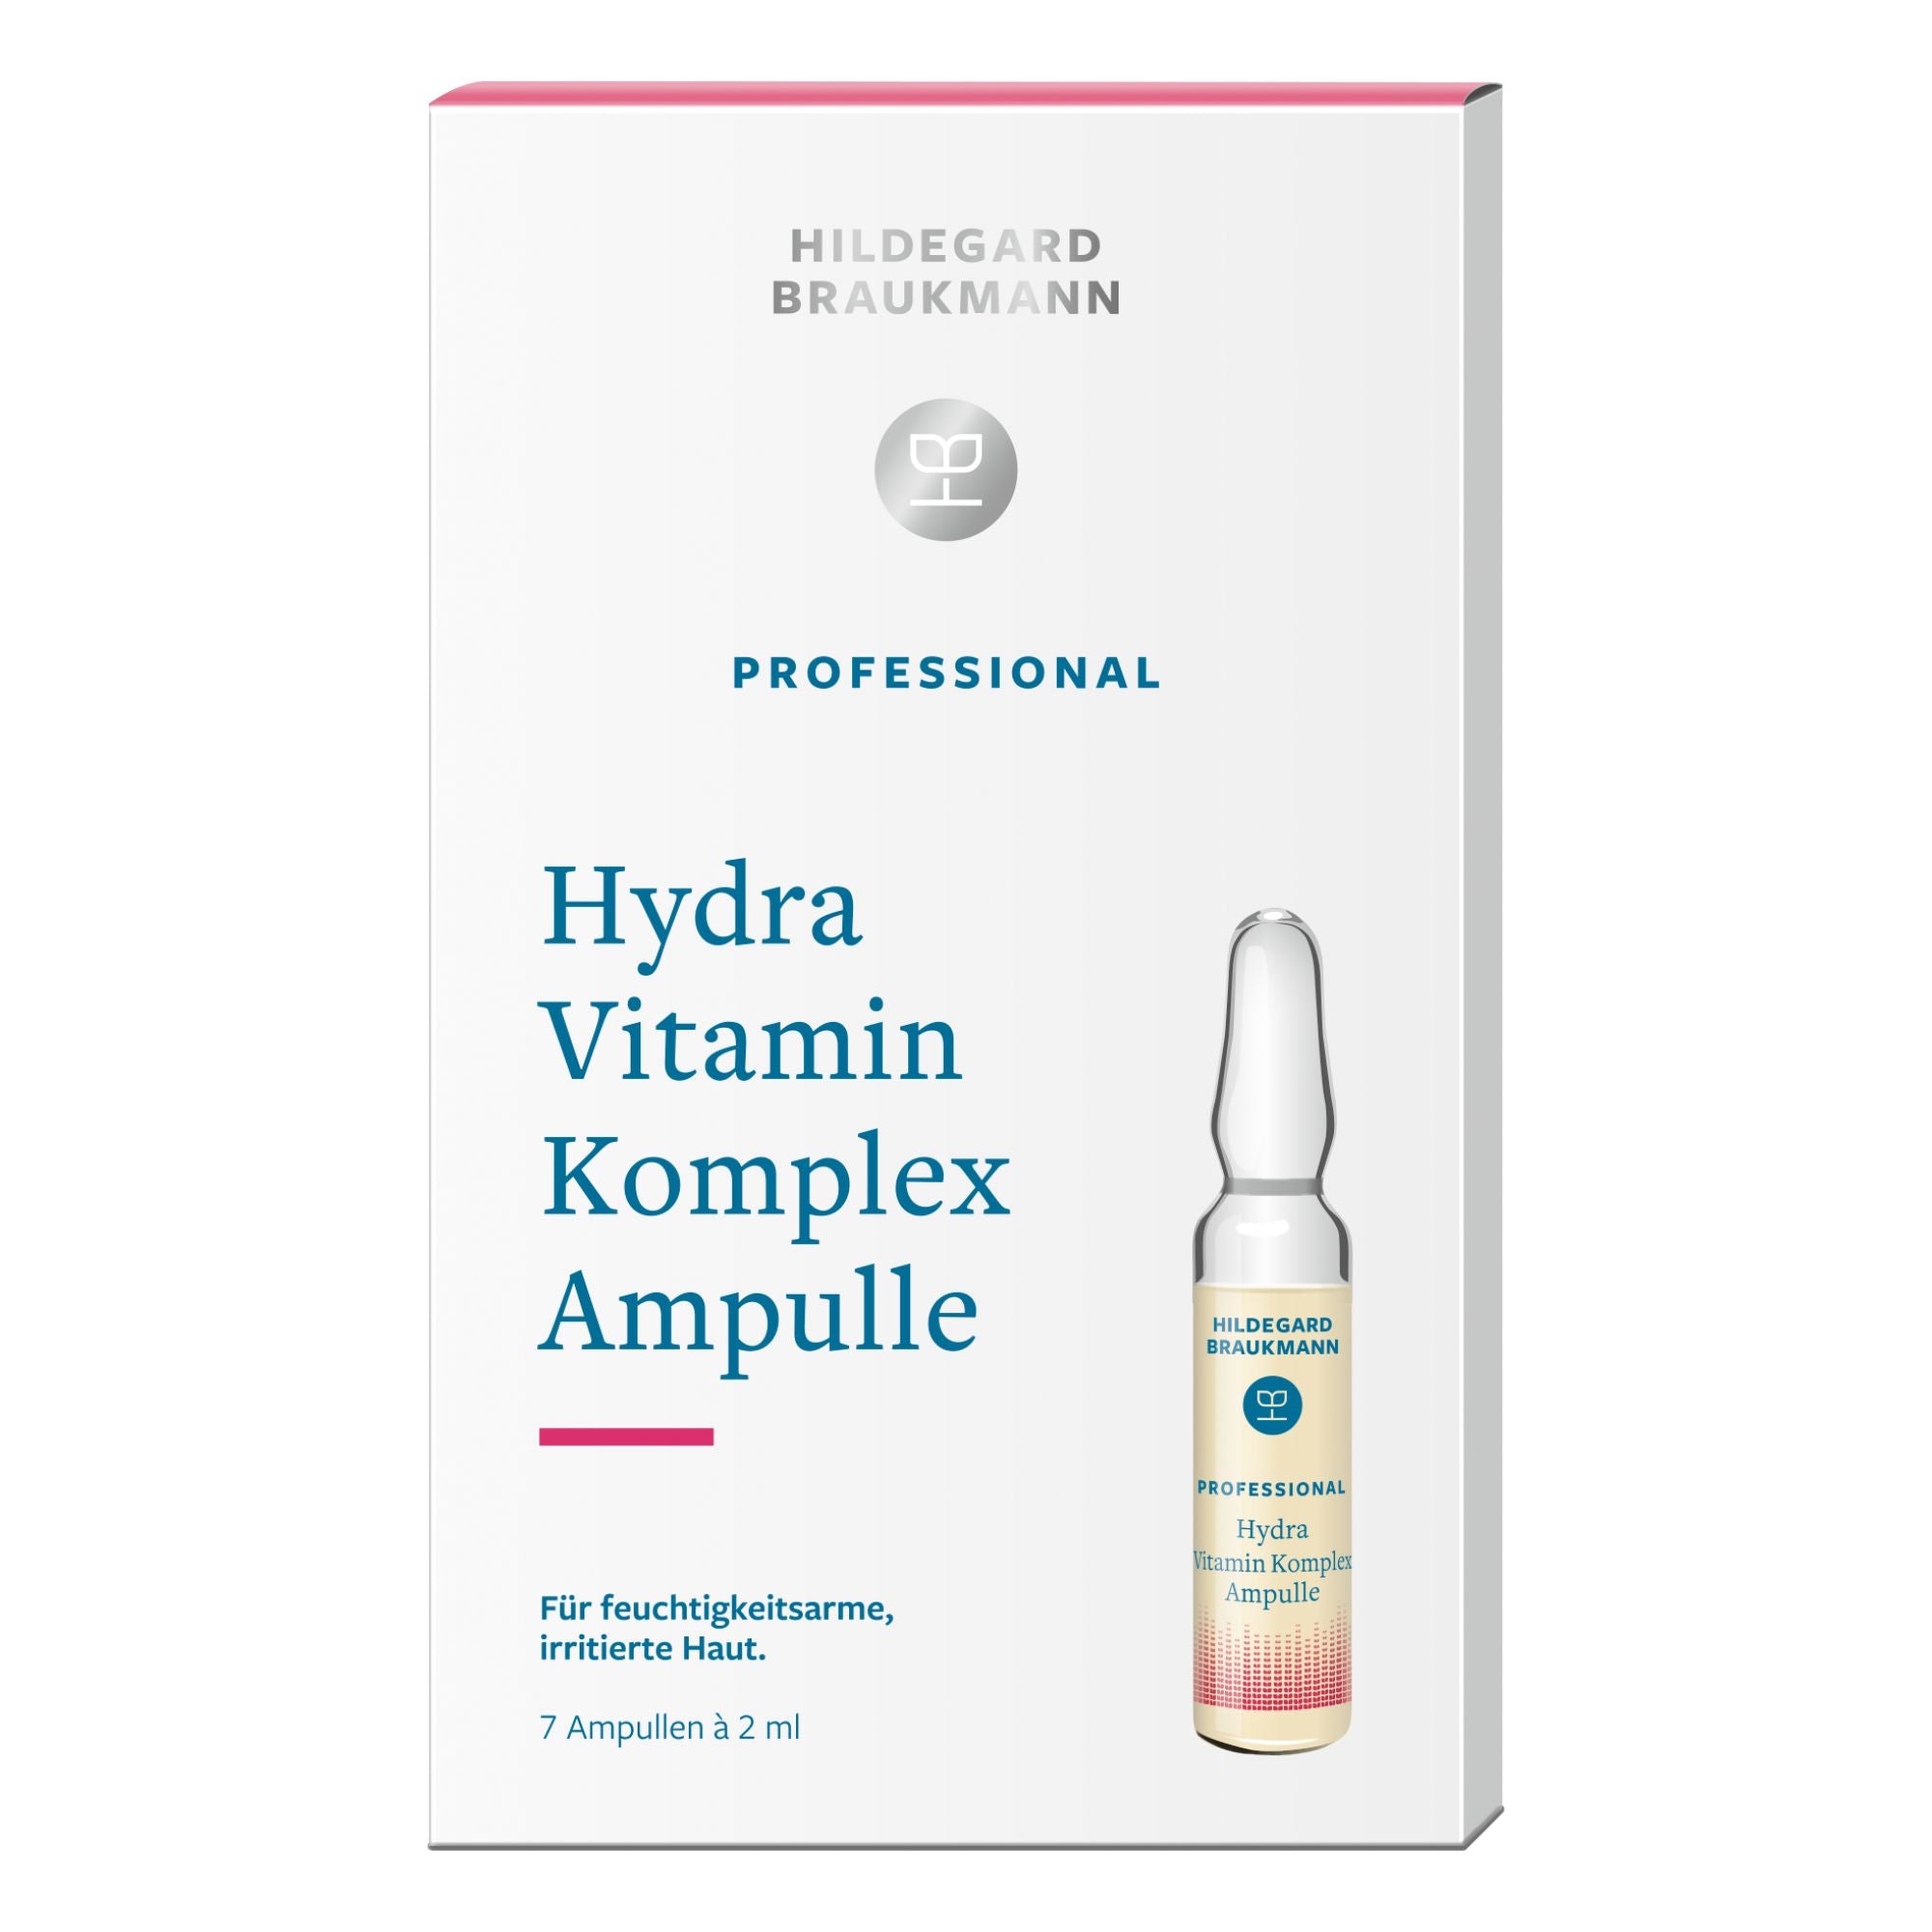 Hildegard Braukmann Professional Hydra Vitamin Komplex Ampulle (7 x 2ml)